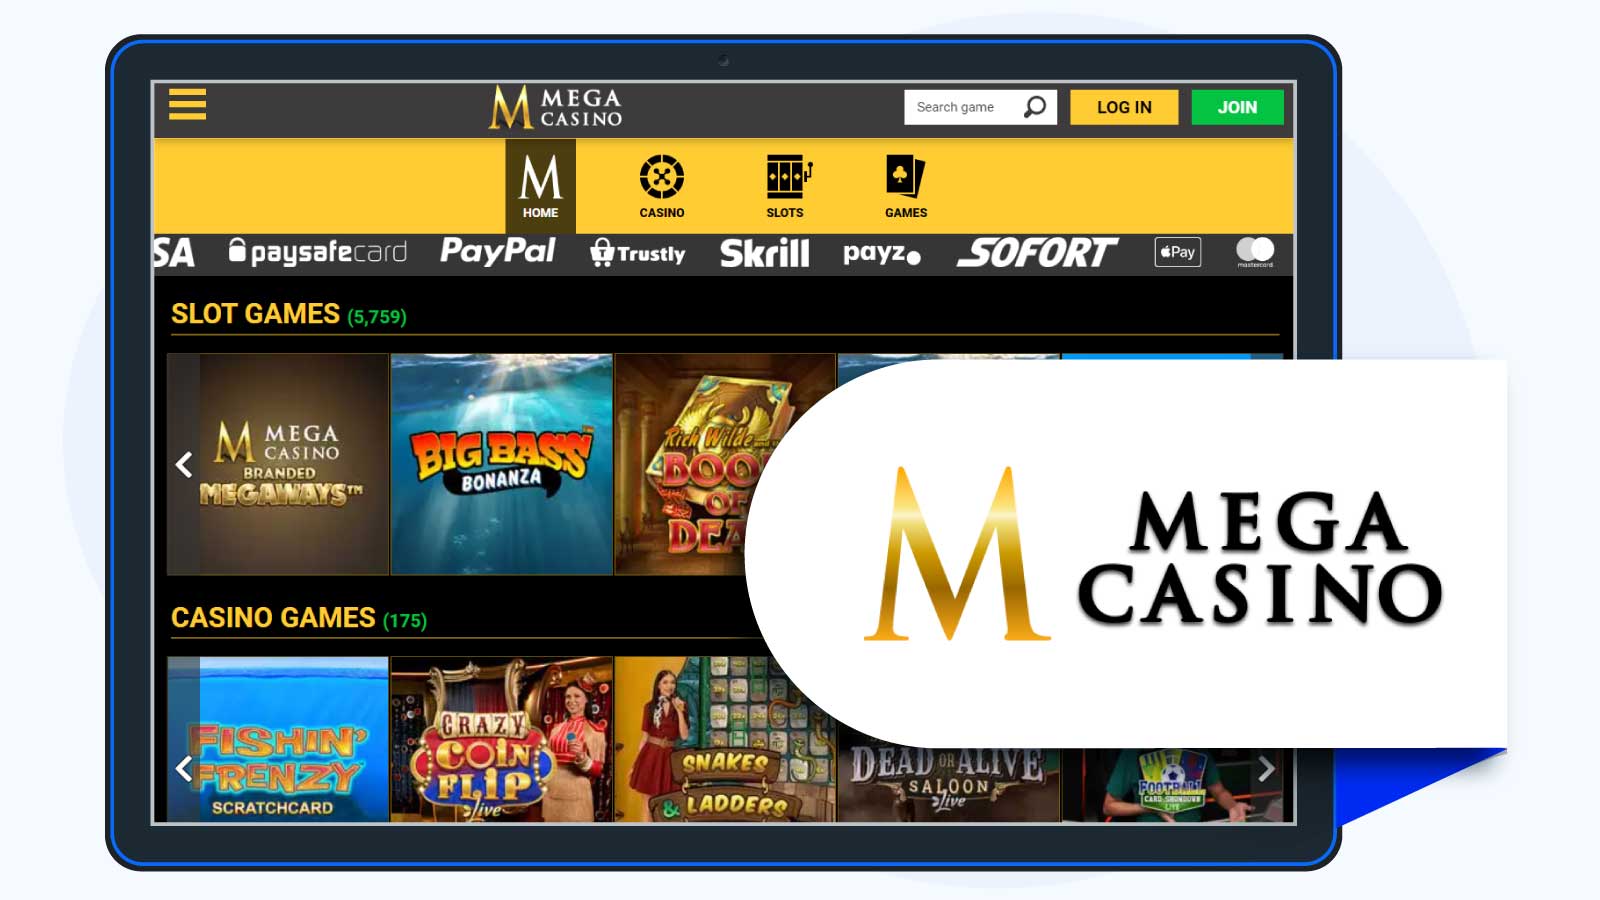 MegaCasino – Best PayPal Casino for Slots